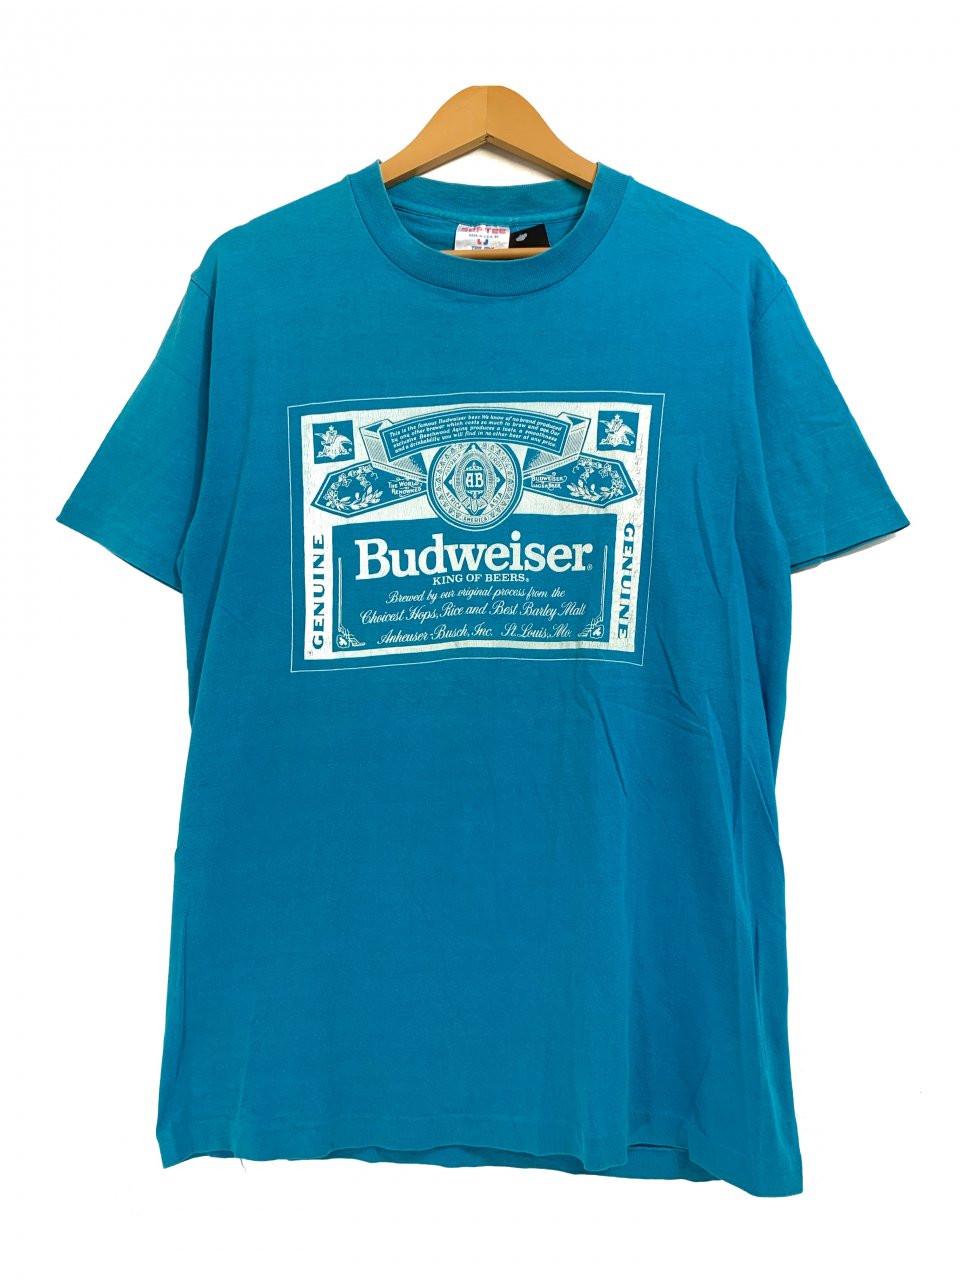 USA製 90s Budweiser Logo S/S Tee 水色 M バドワイザー 半袖 Tシャツ